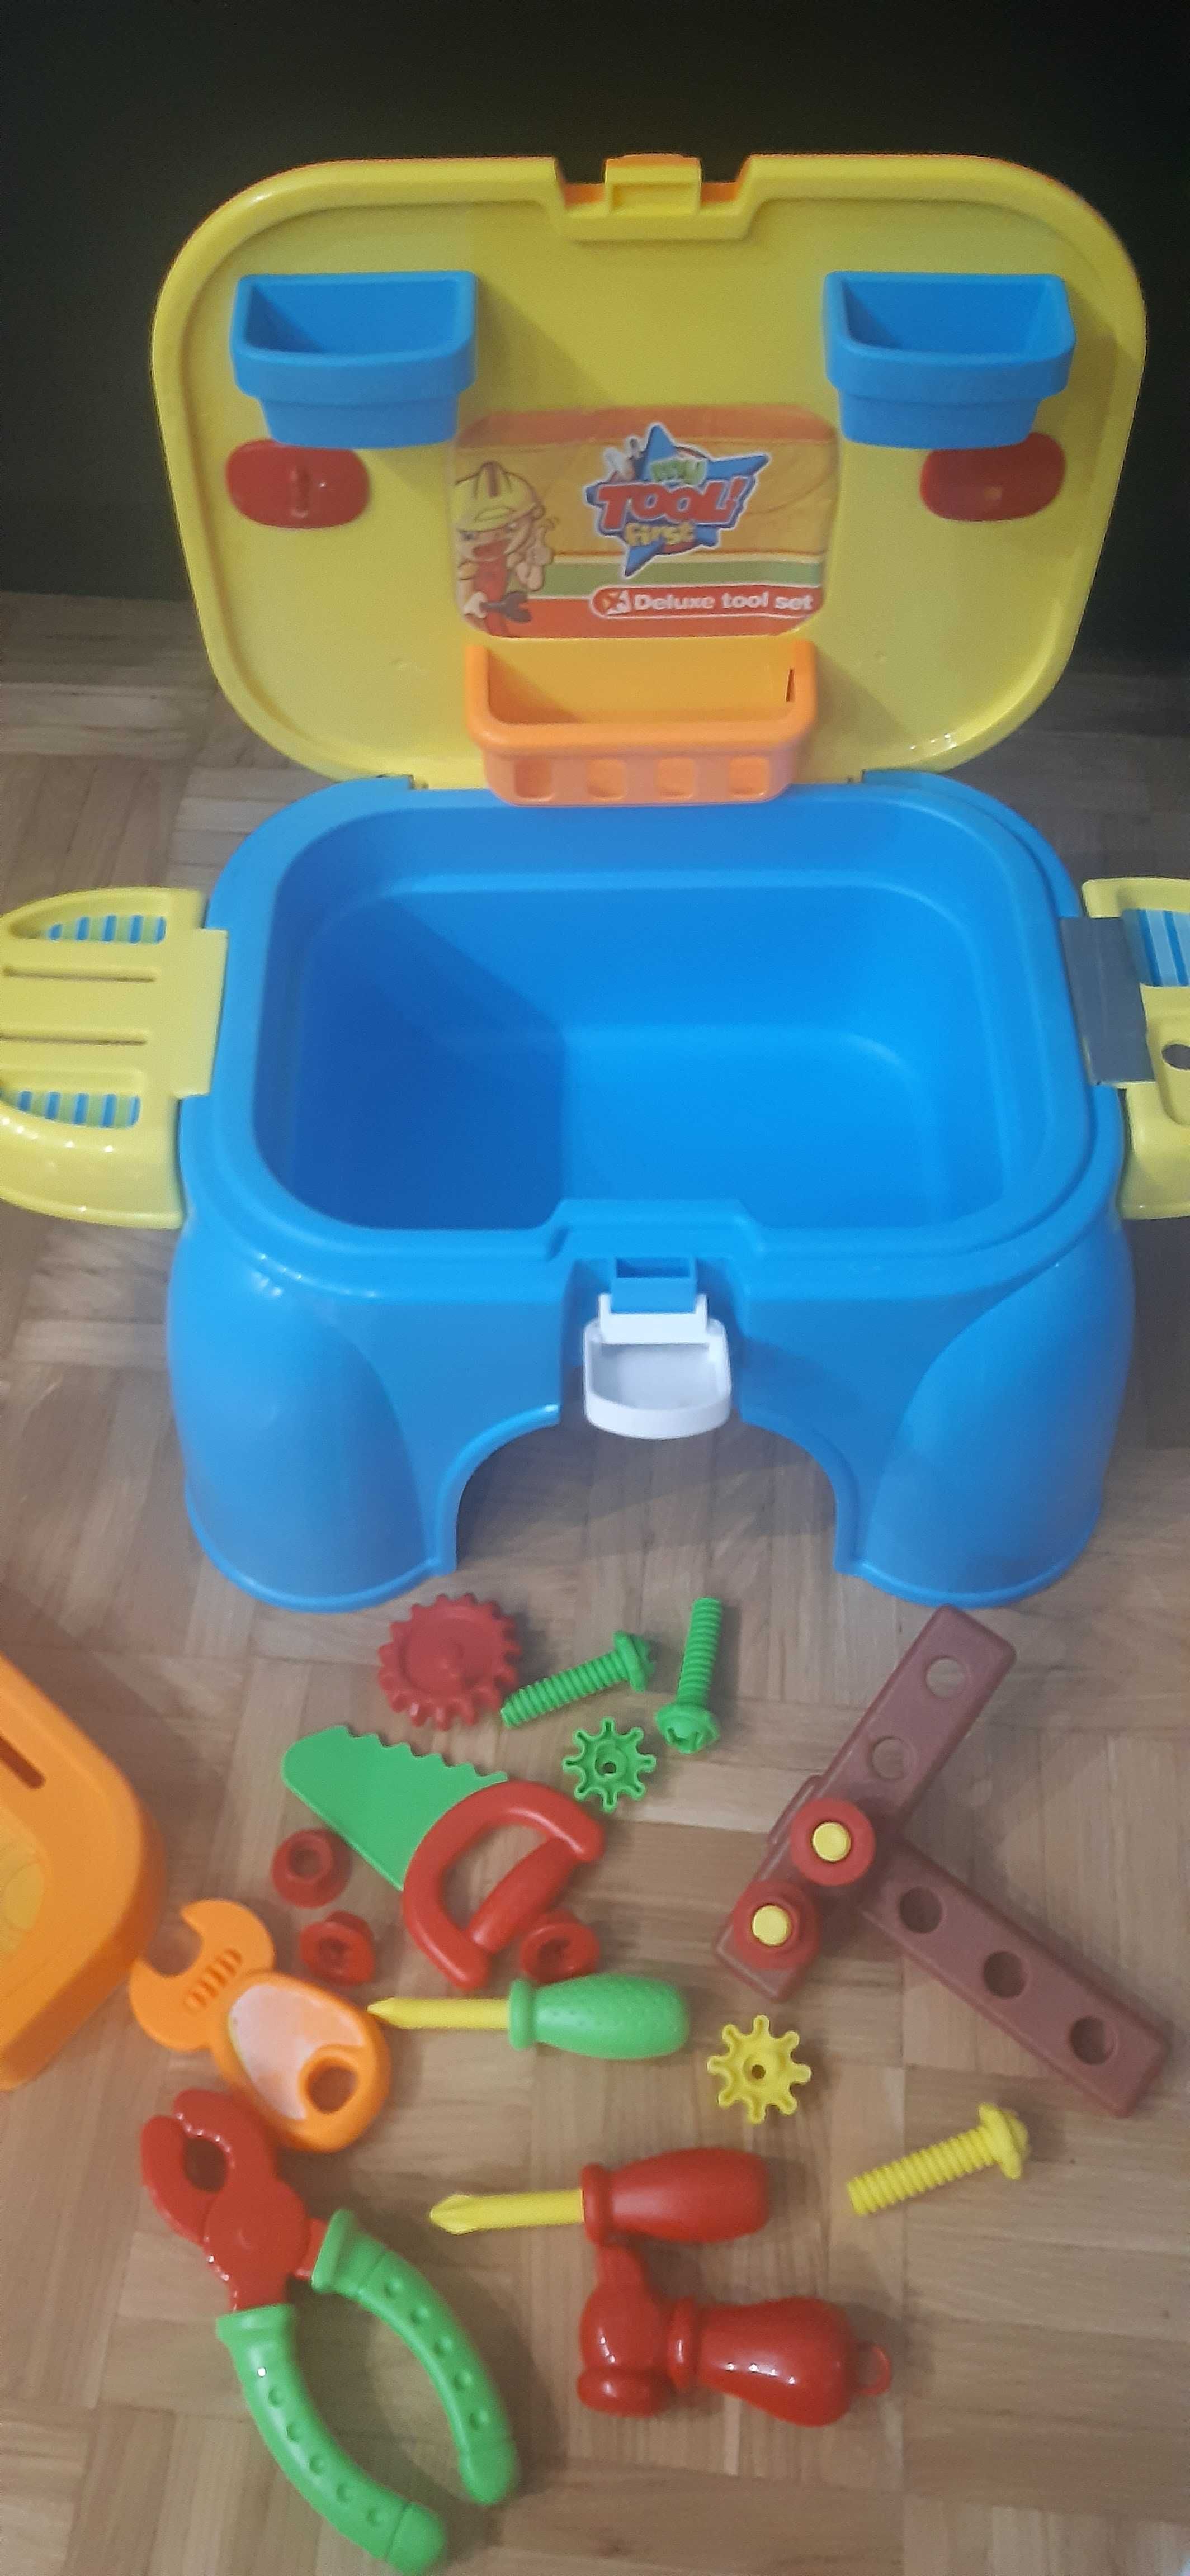 Zabawka edukacyjna warsztat krzesełko plastik